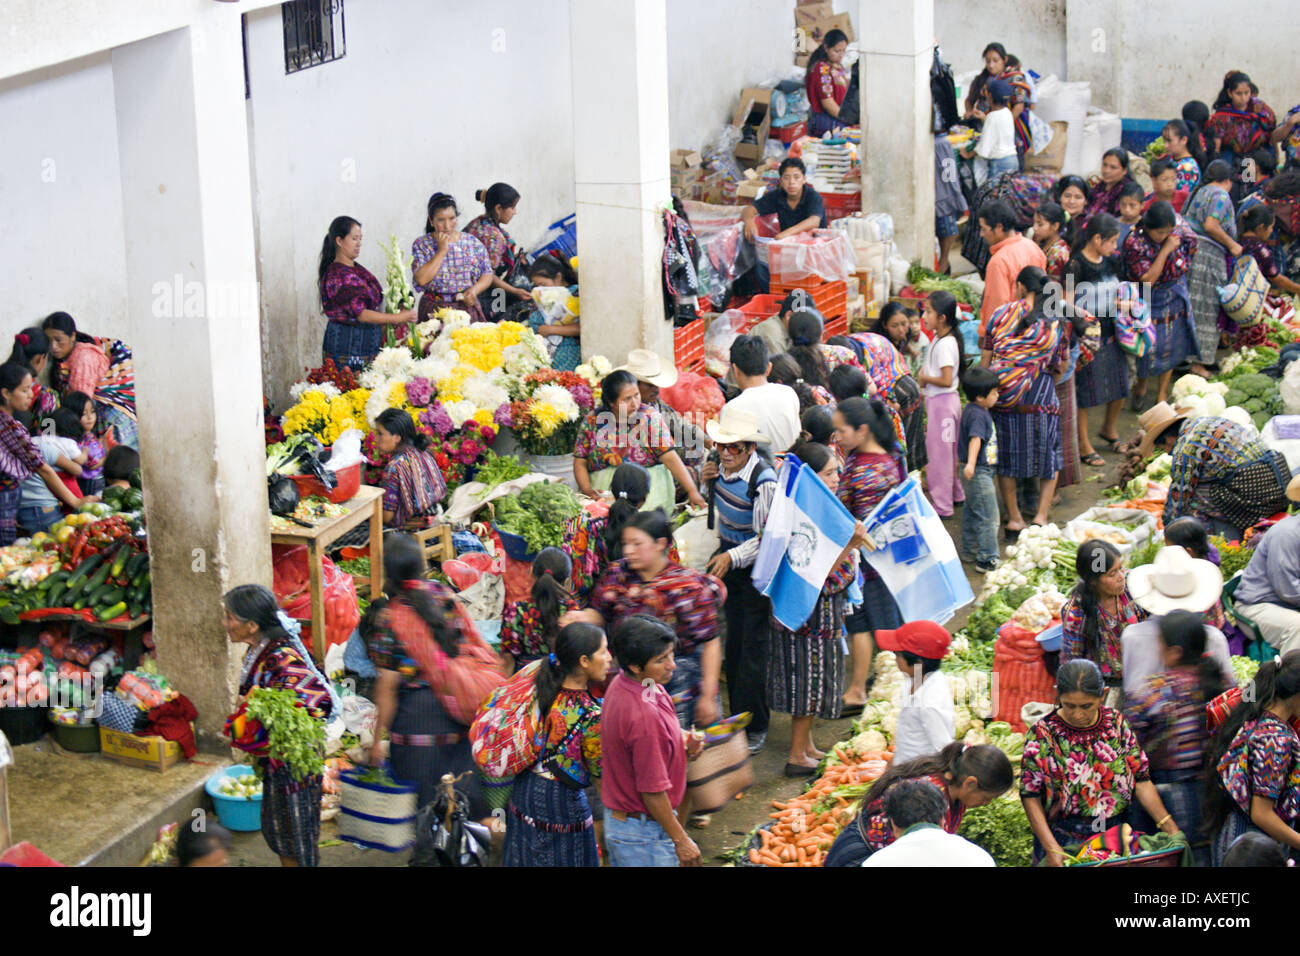 GUATEMALA CHICHICASTENANGO An overhead view of the large indoor indigenous vegetable market in Chichicastenango Stock Photo